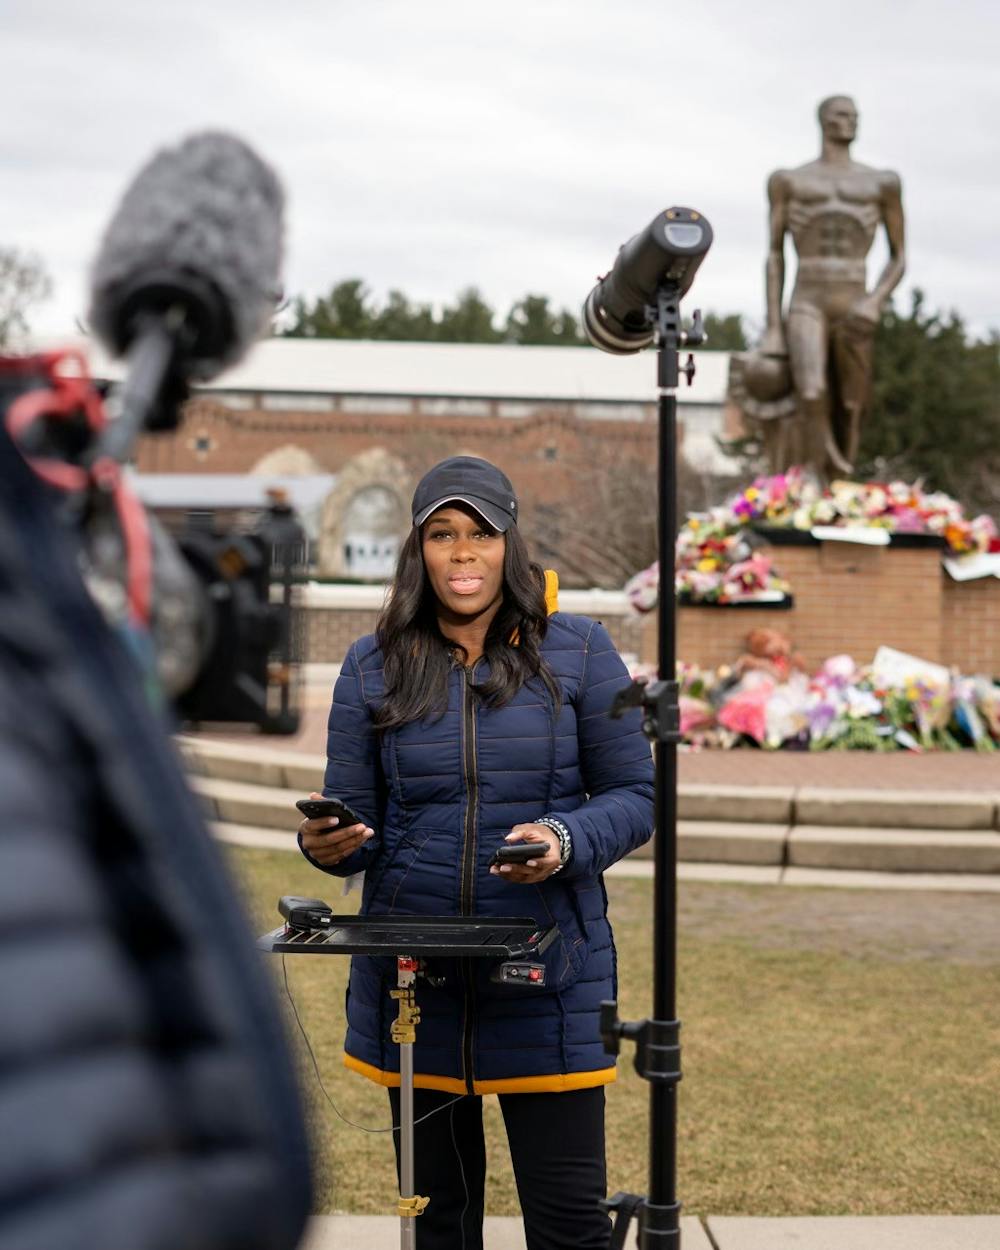 MSU alumna and CNN correspondant Adrienne Broaddus interviews after Michigan State's mass shooting. Courtesy of Eric Olanowski/Olo Media